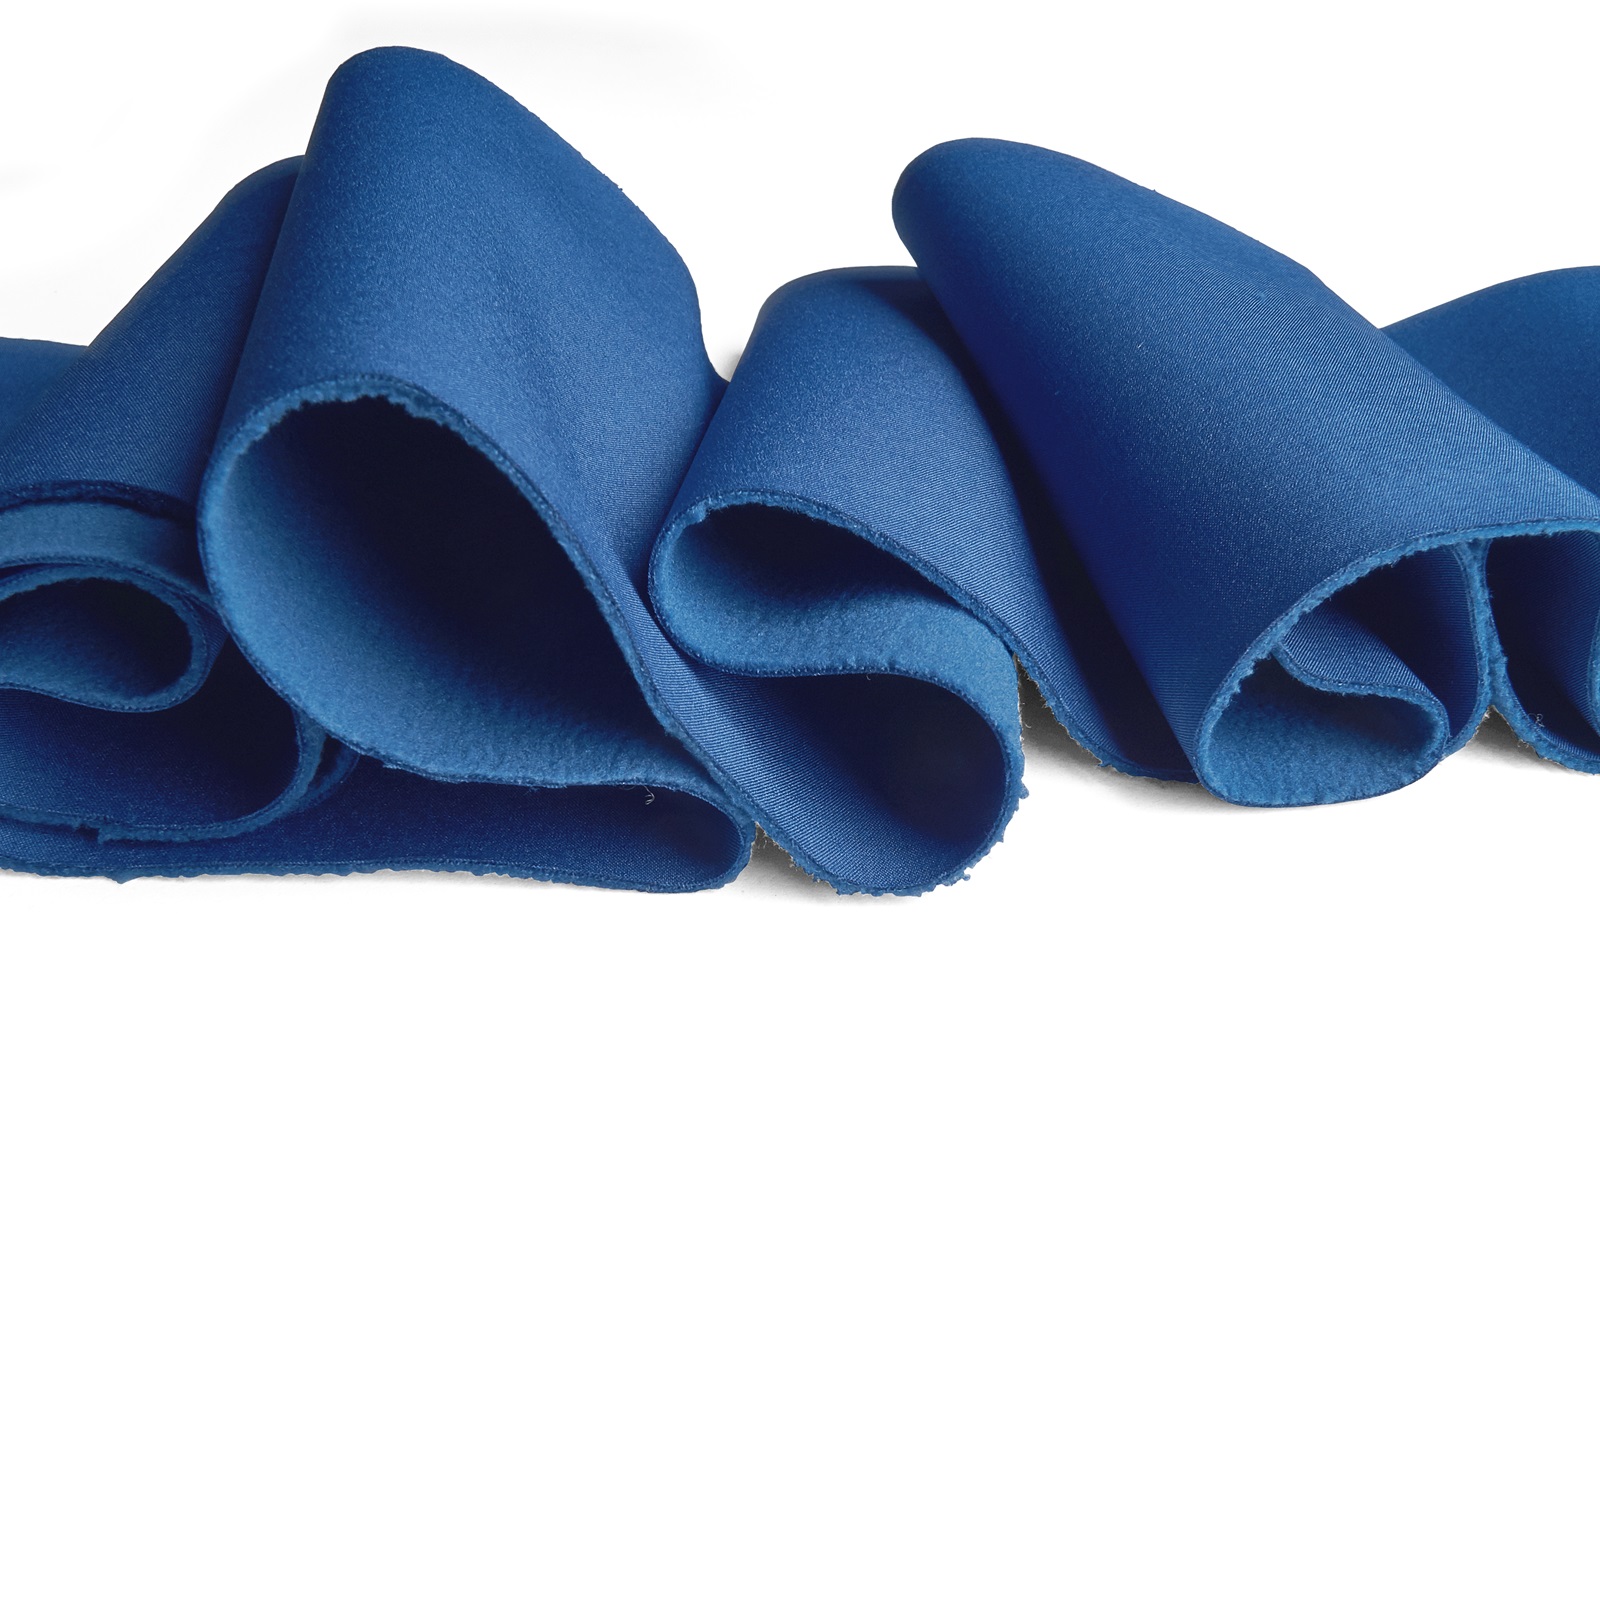 Softshell - Winddicht, Wasserdicht, Atmungsaktiv-indigo blau